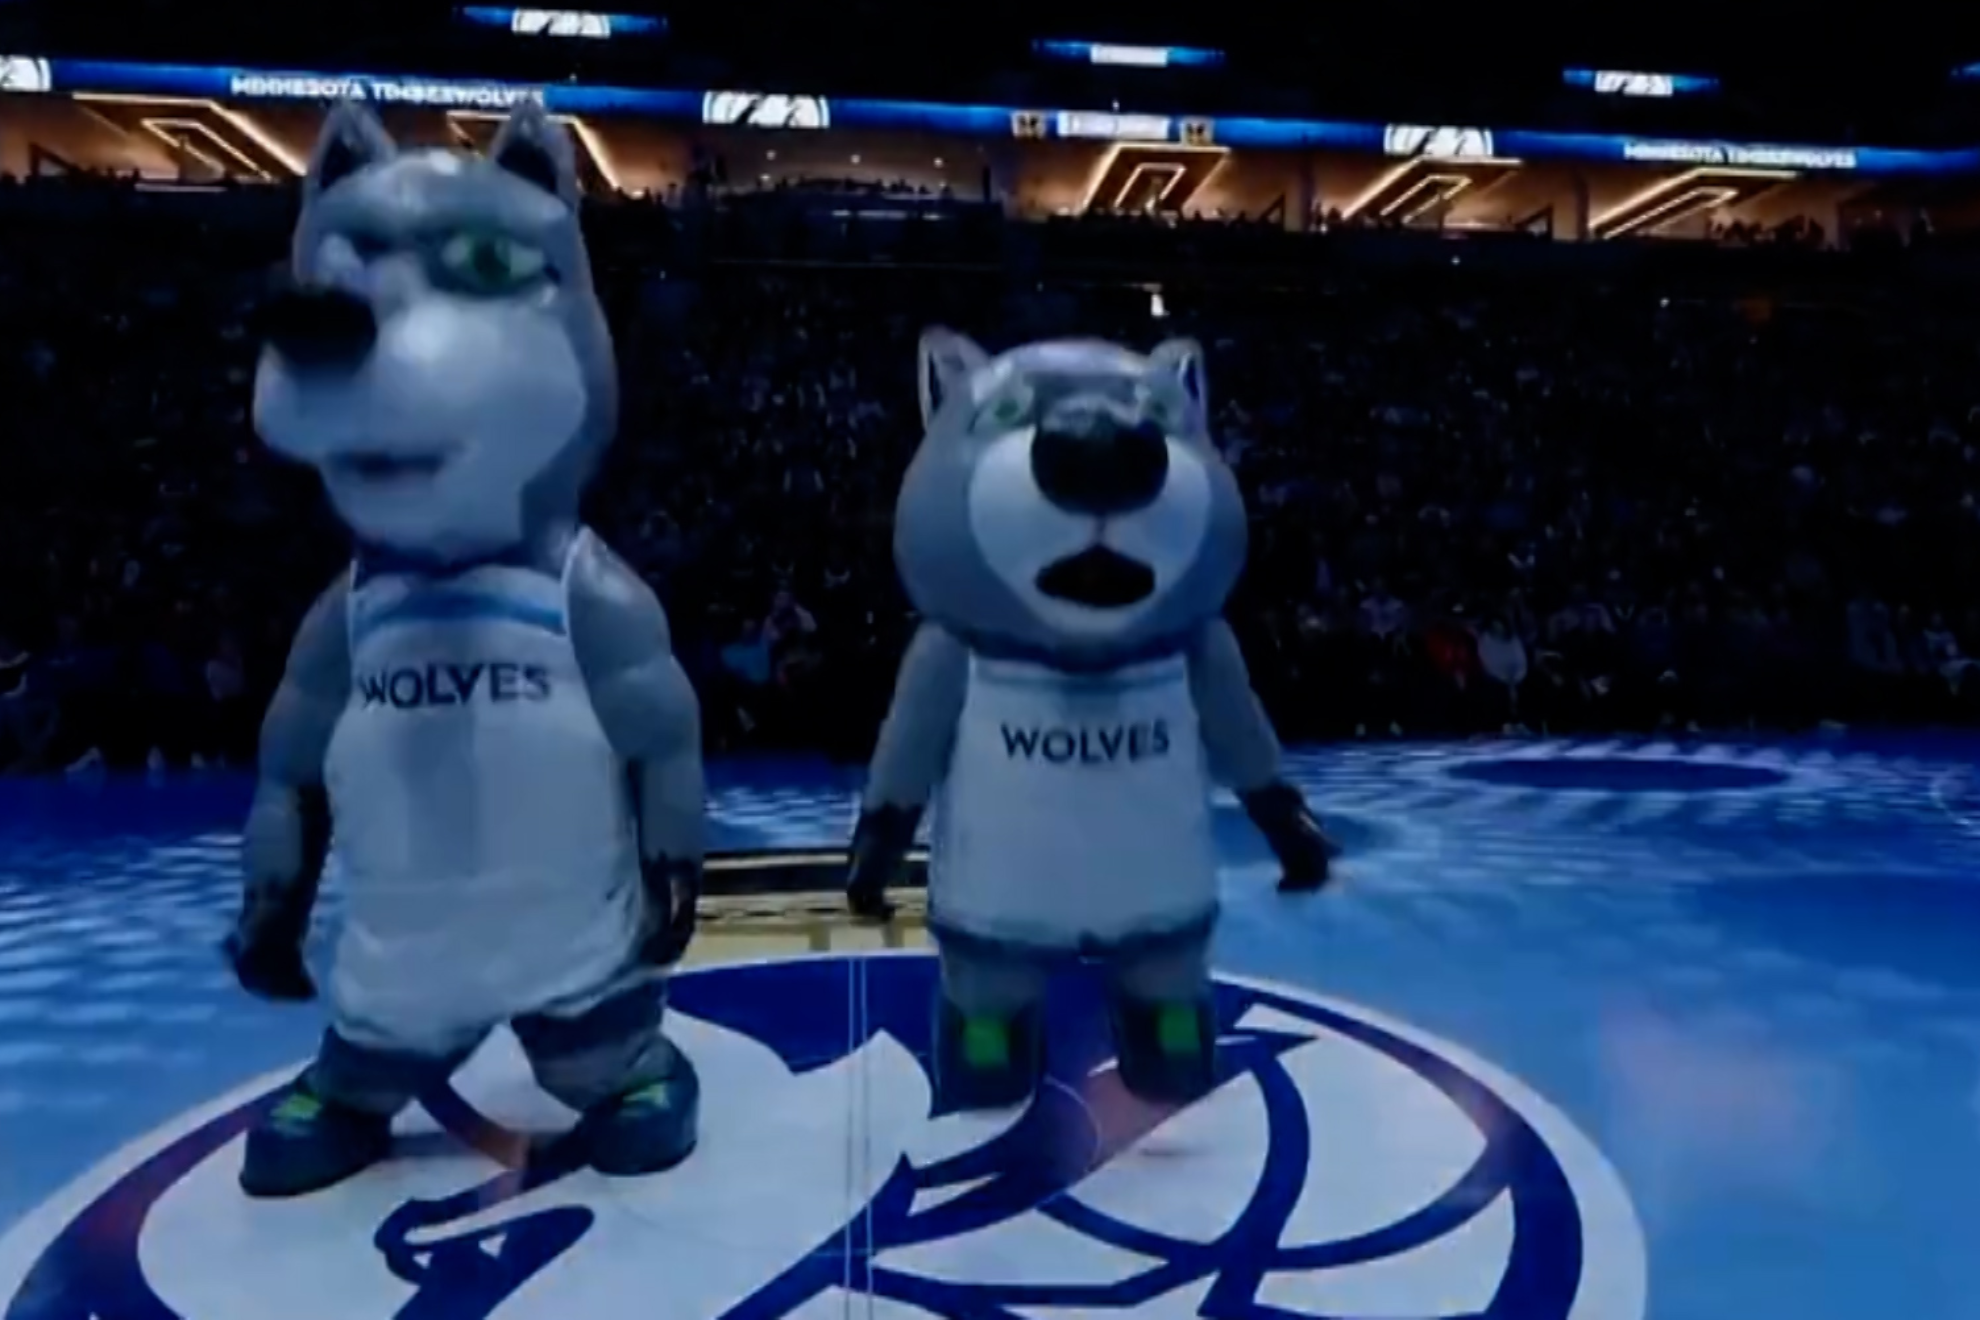 Minnesota Timberwolves mascots go viral for hilarious pregame dance routine